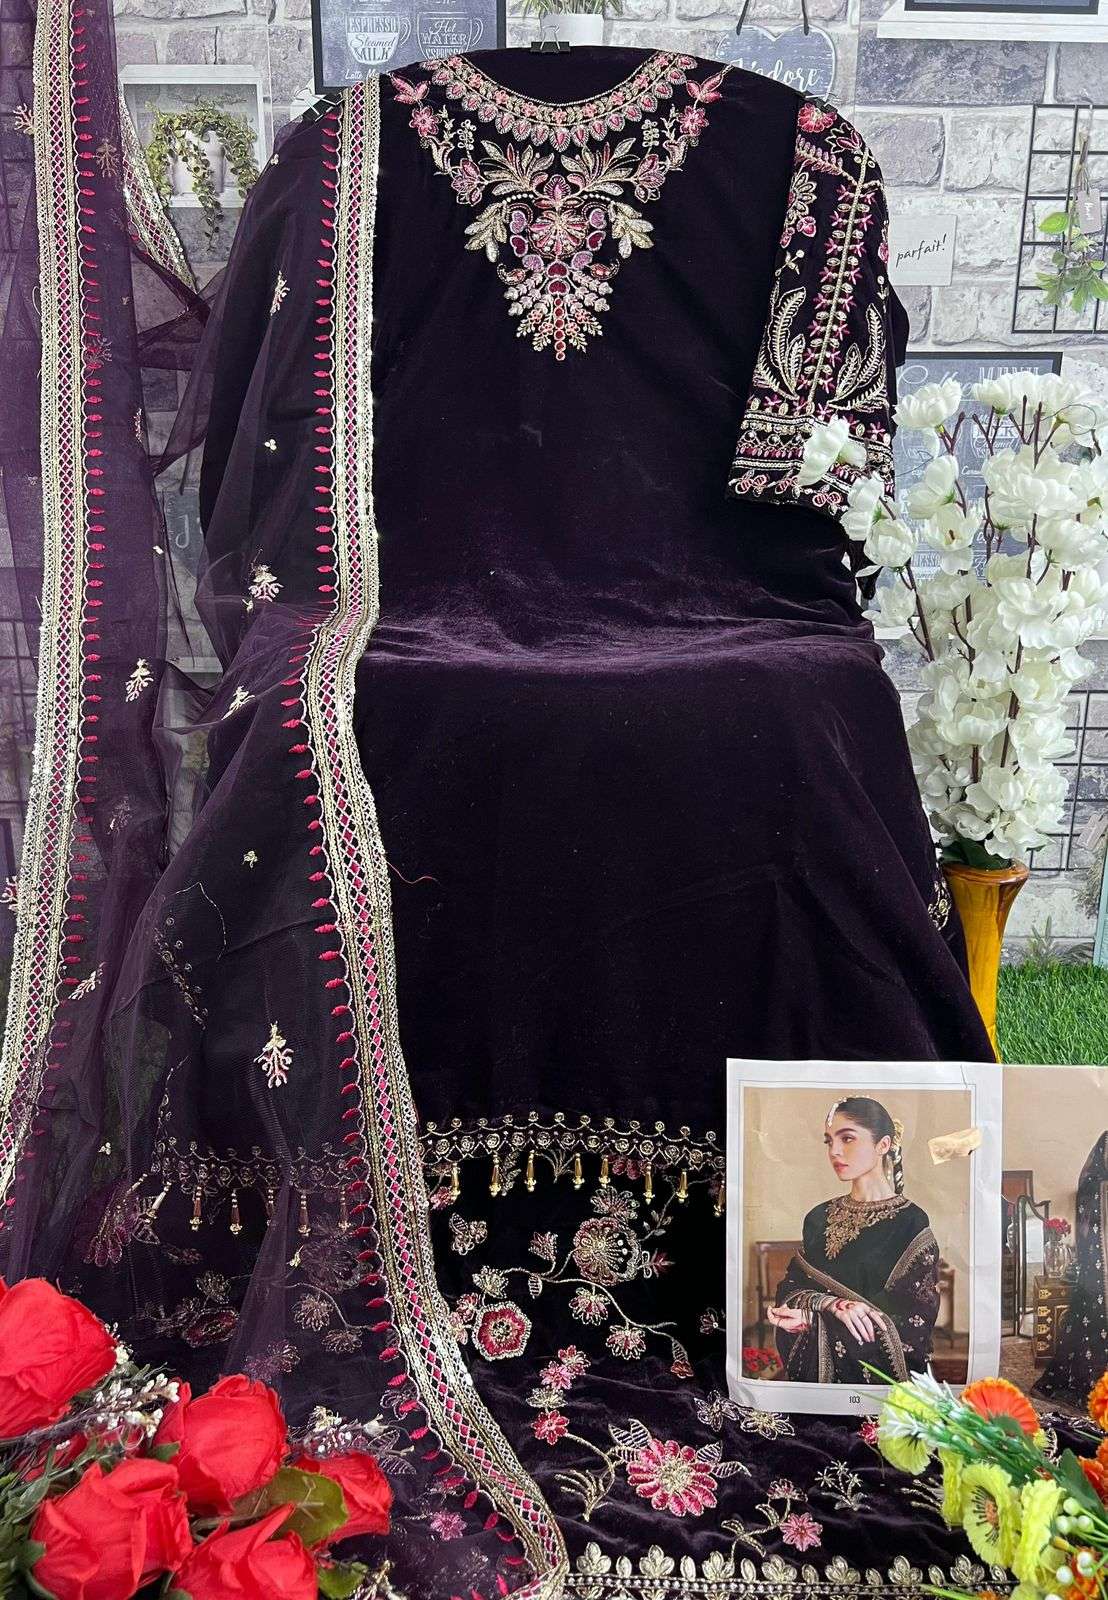 maria b 101-104 series deepsy suits latest designer pakistani salwar kameez wholesaler surat gujarat